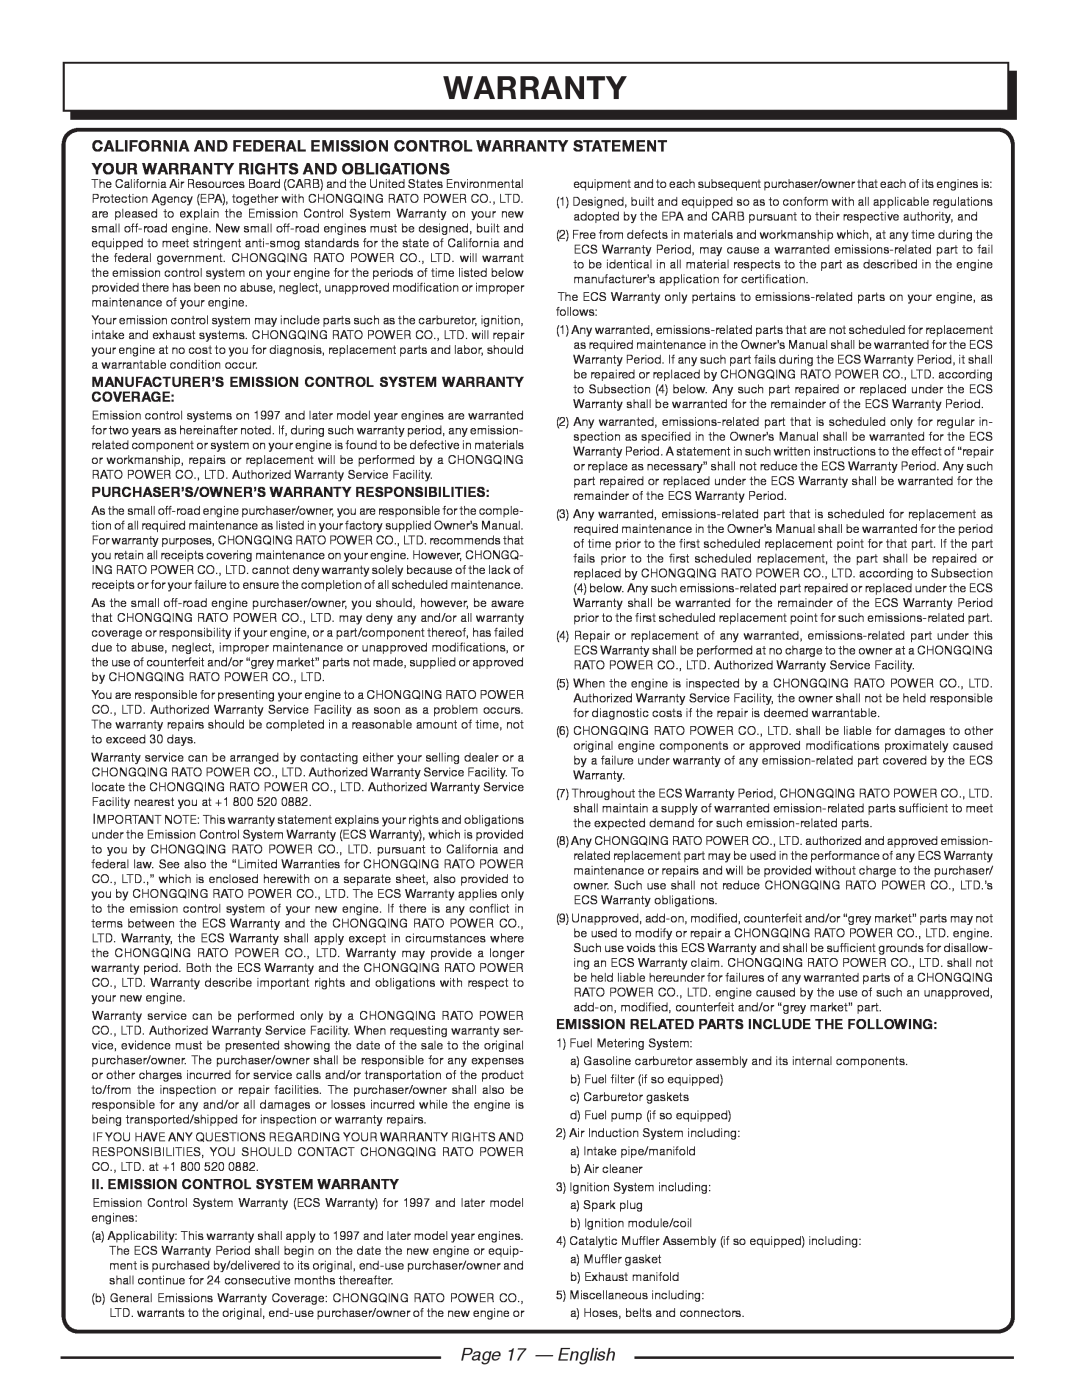 Homelite UT80546, UT80977 Page 17 - English, Manufacturer’S Emission Control System Warranty Coverage 